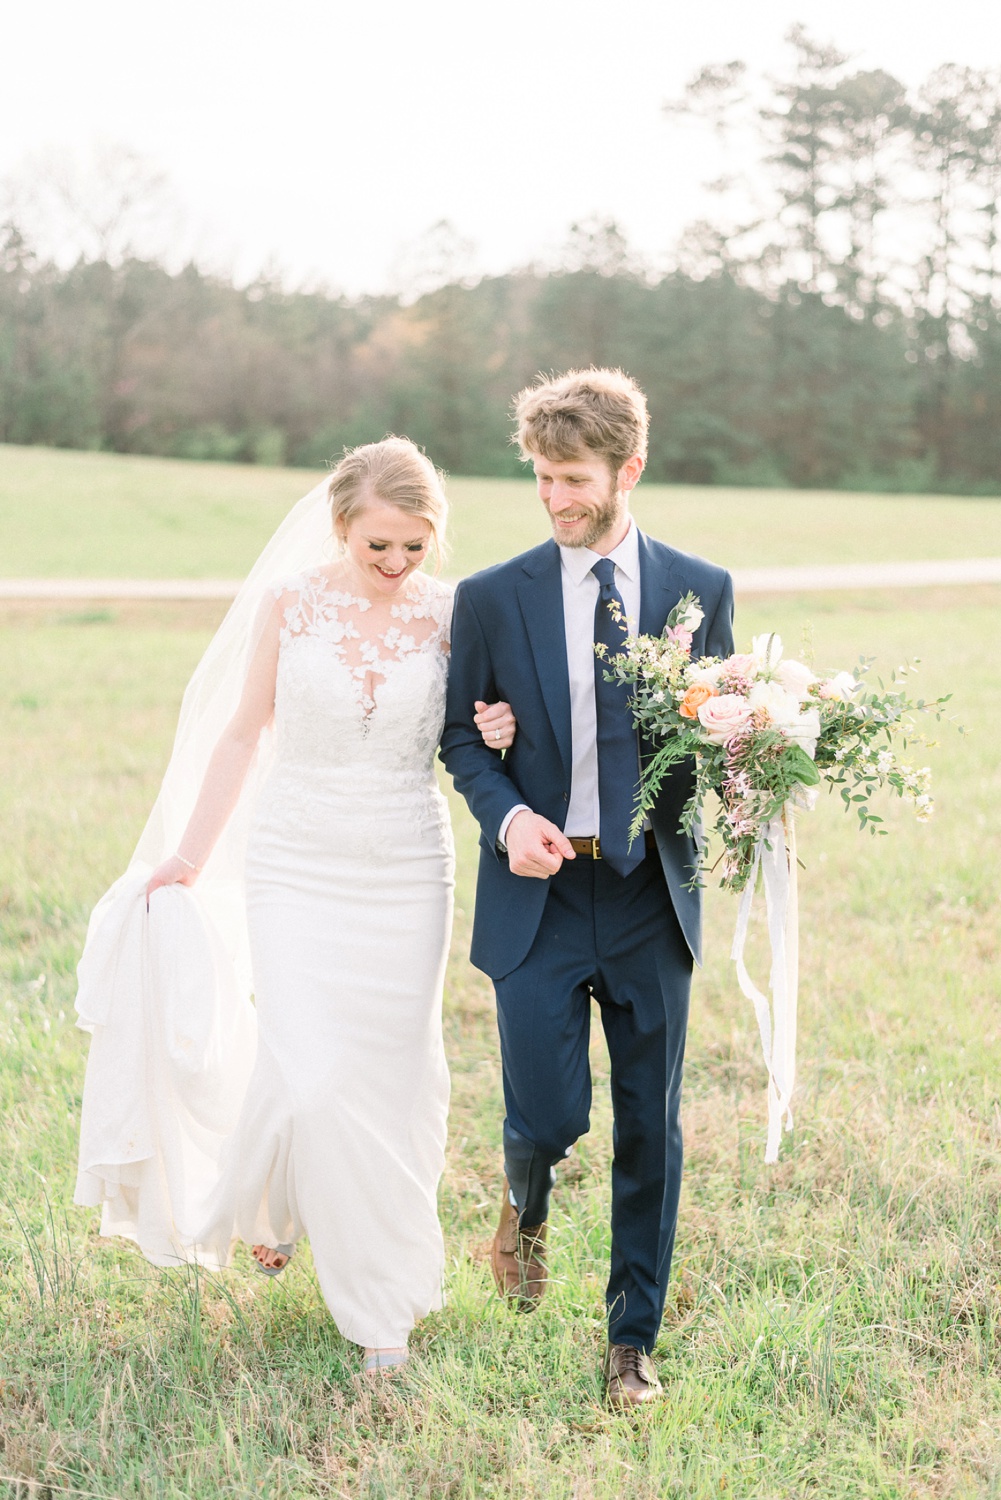 JandD Farms Gadsden Alabama Wedding | Birmingham Alabama Wedding Photographers_0035.jpg